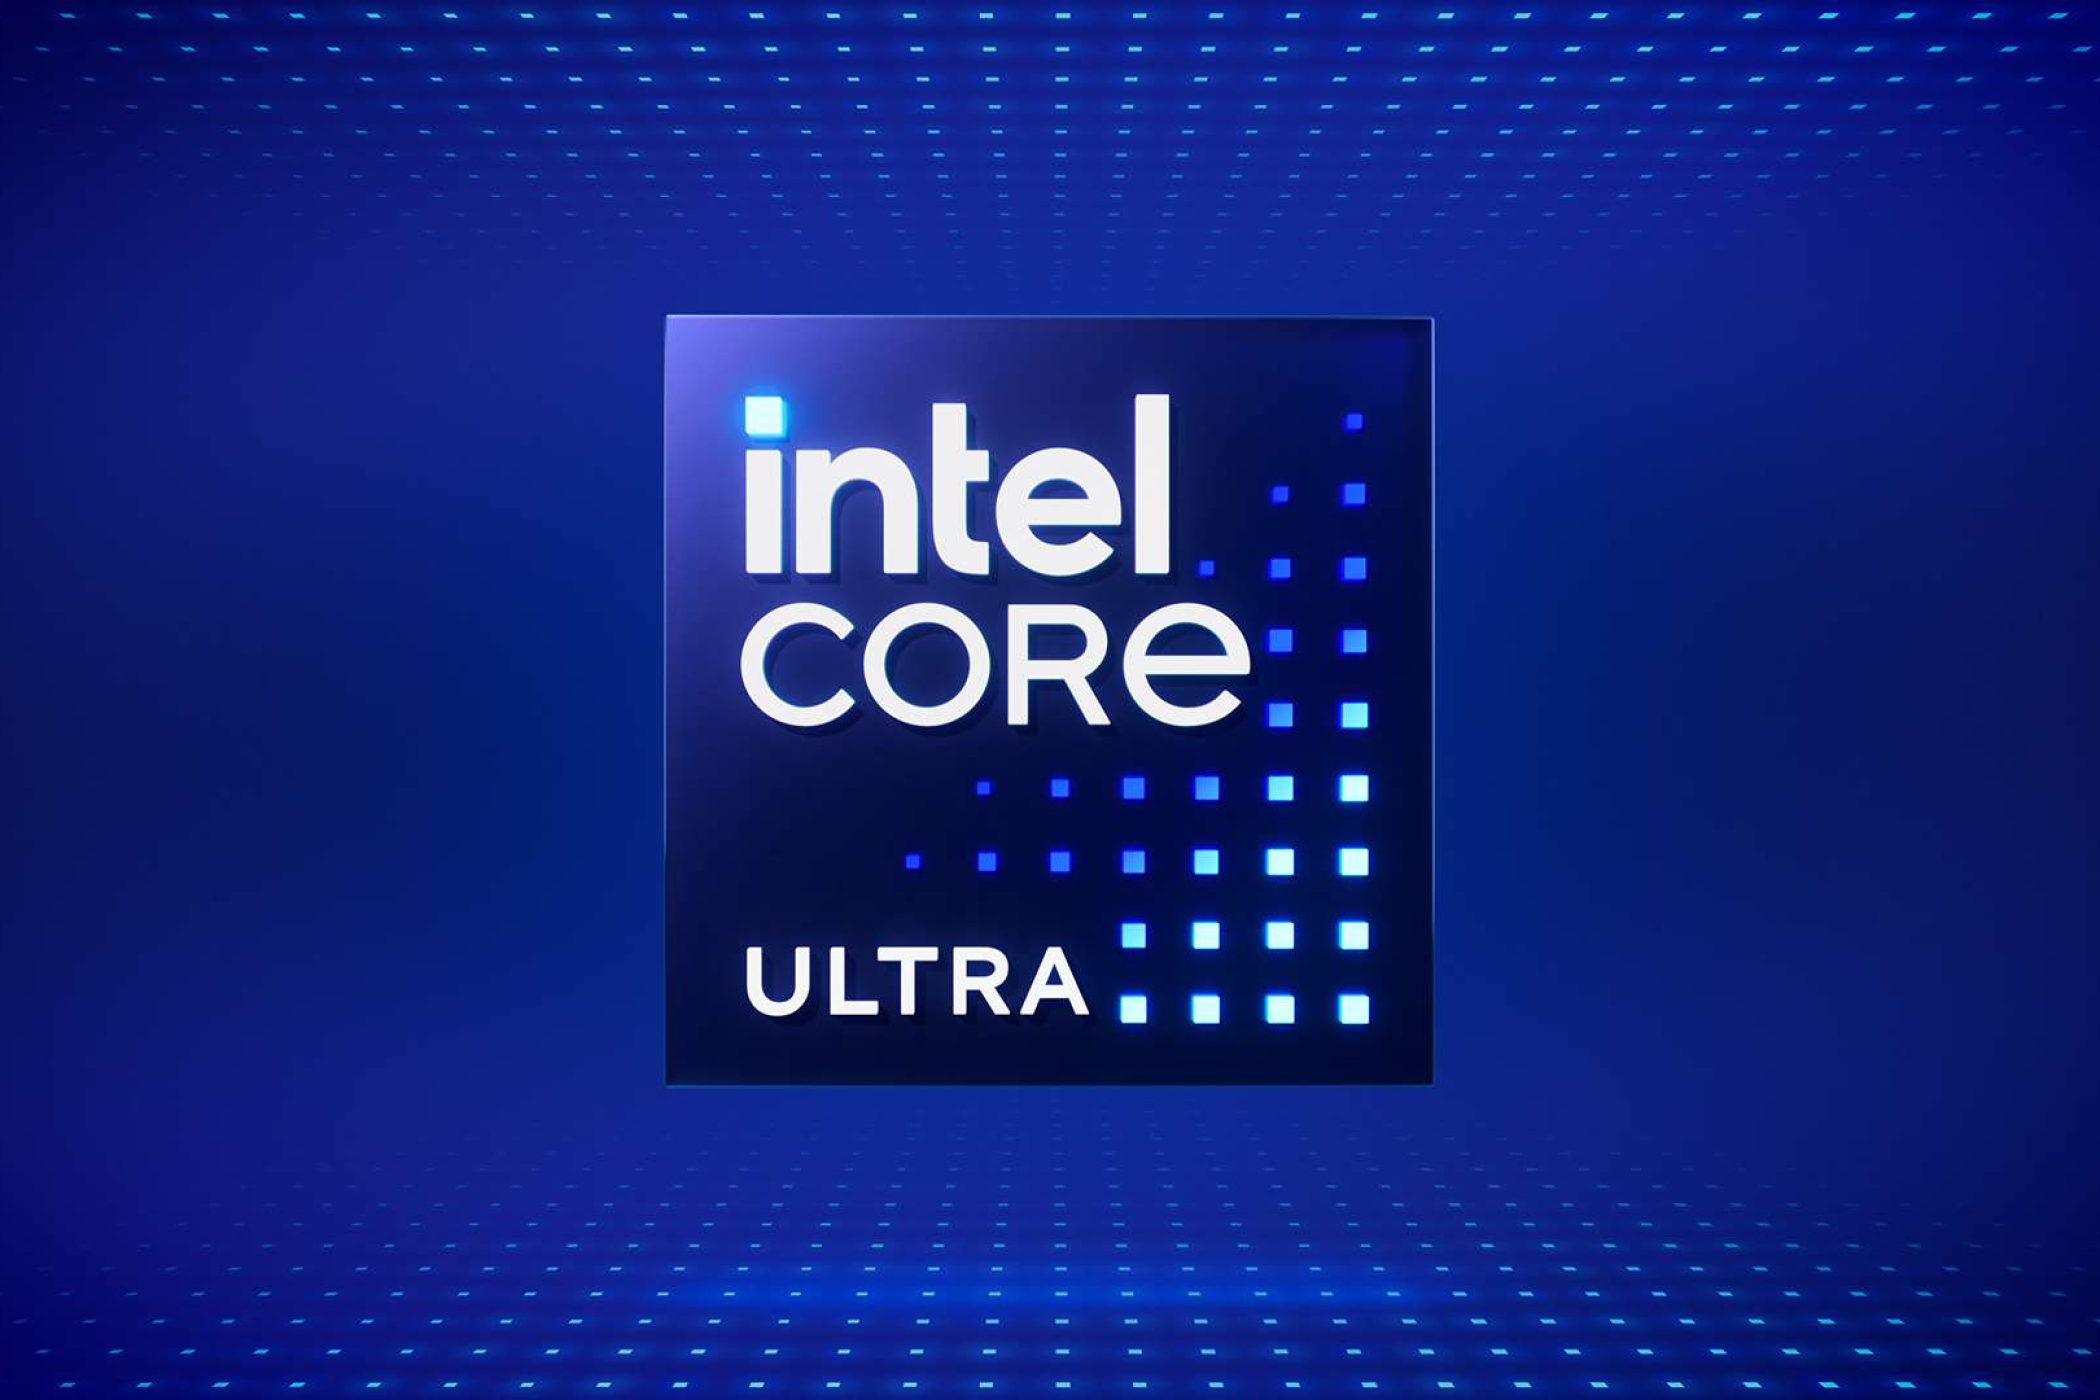 The Intel Core Ultra logo.